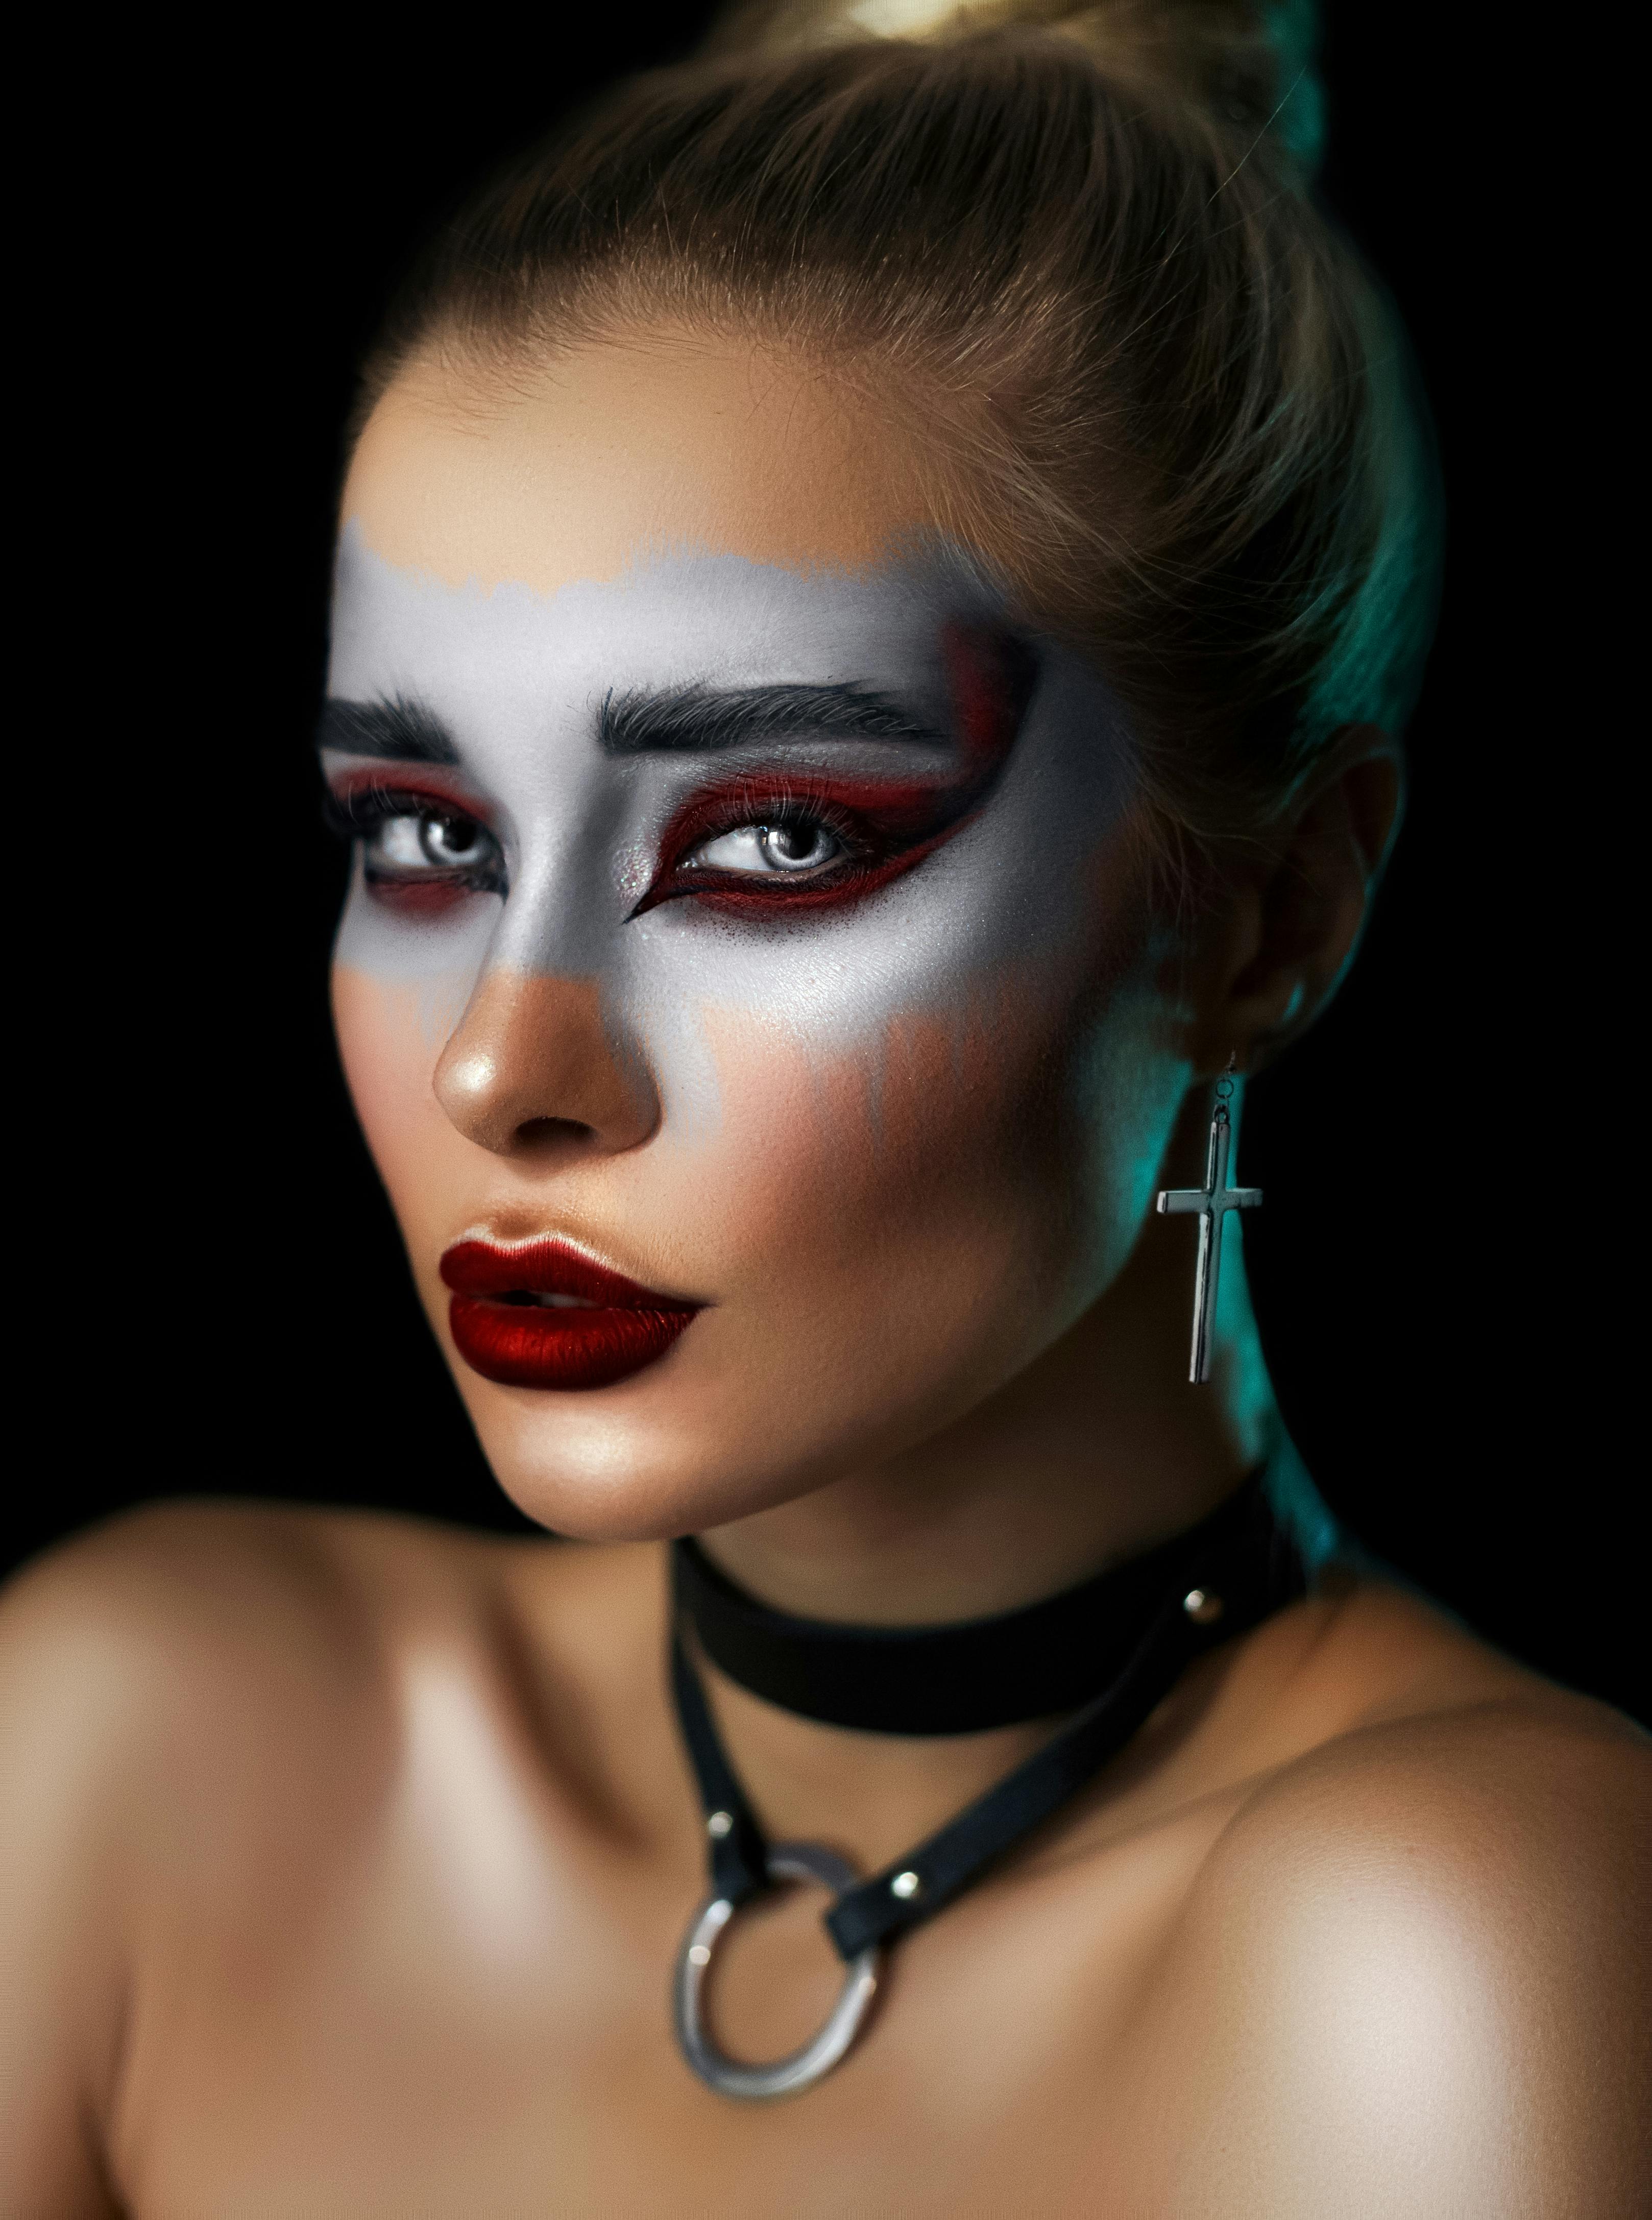 Optimaal Kwaadaardige tumor zeevruchten Female model with creative makeup · Free Stock Photo